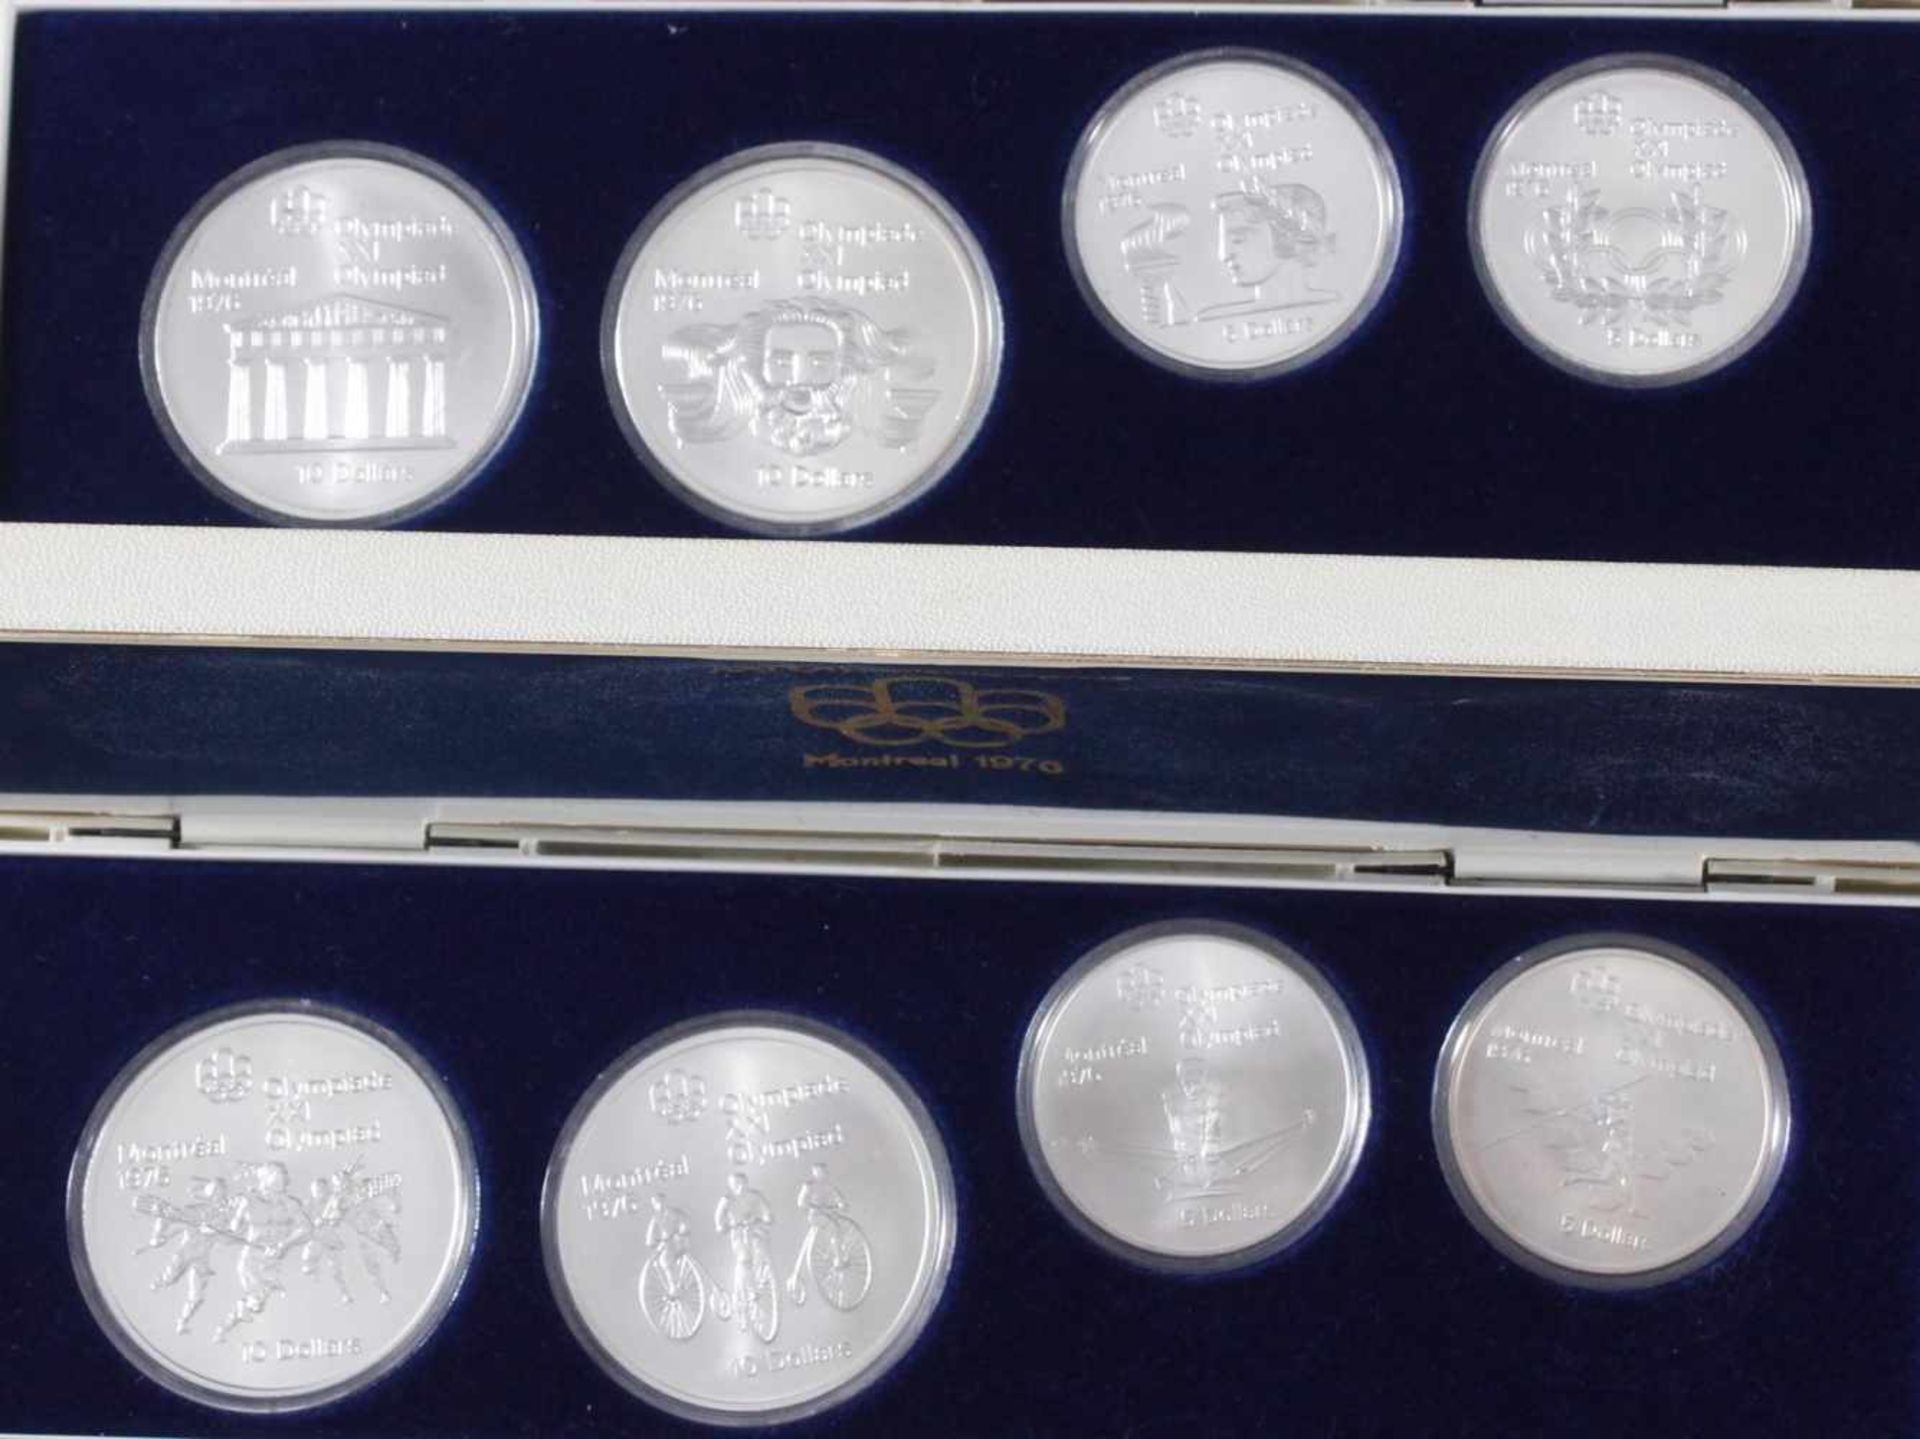 28x Silbermünzen Montreal 1976, kompletter Satz< - Image 2 of 5